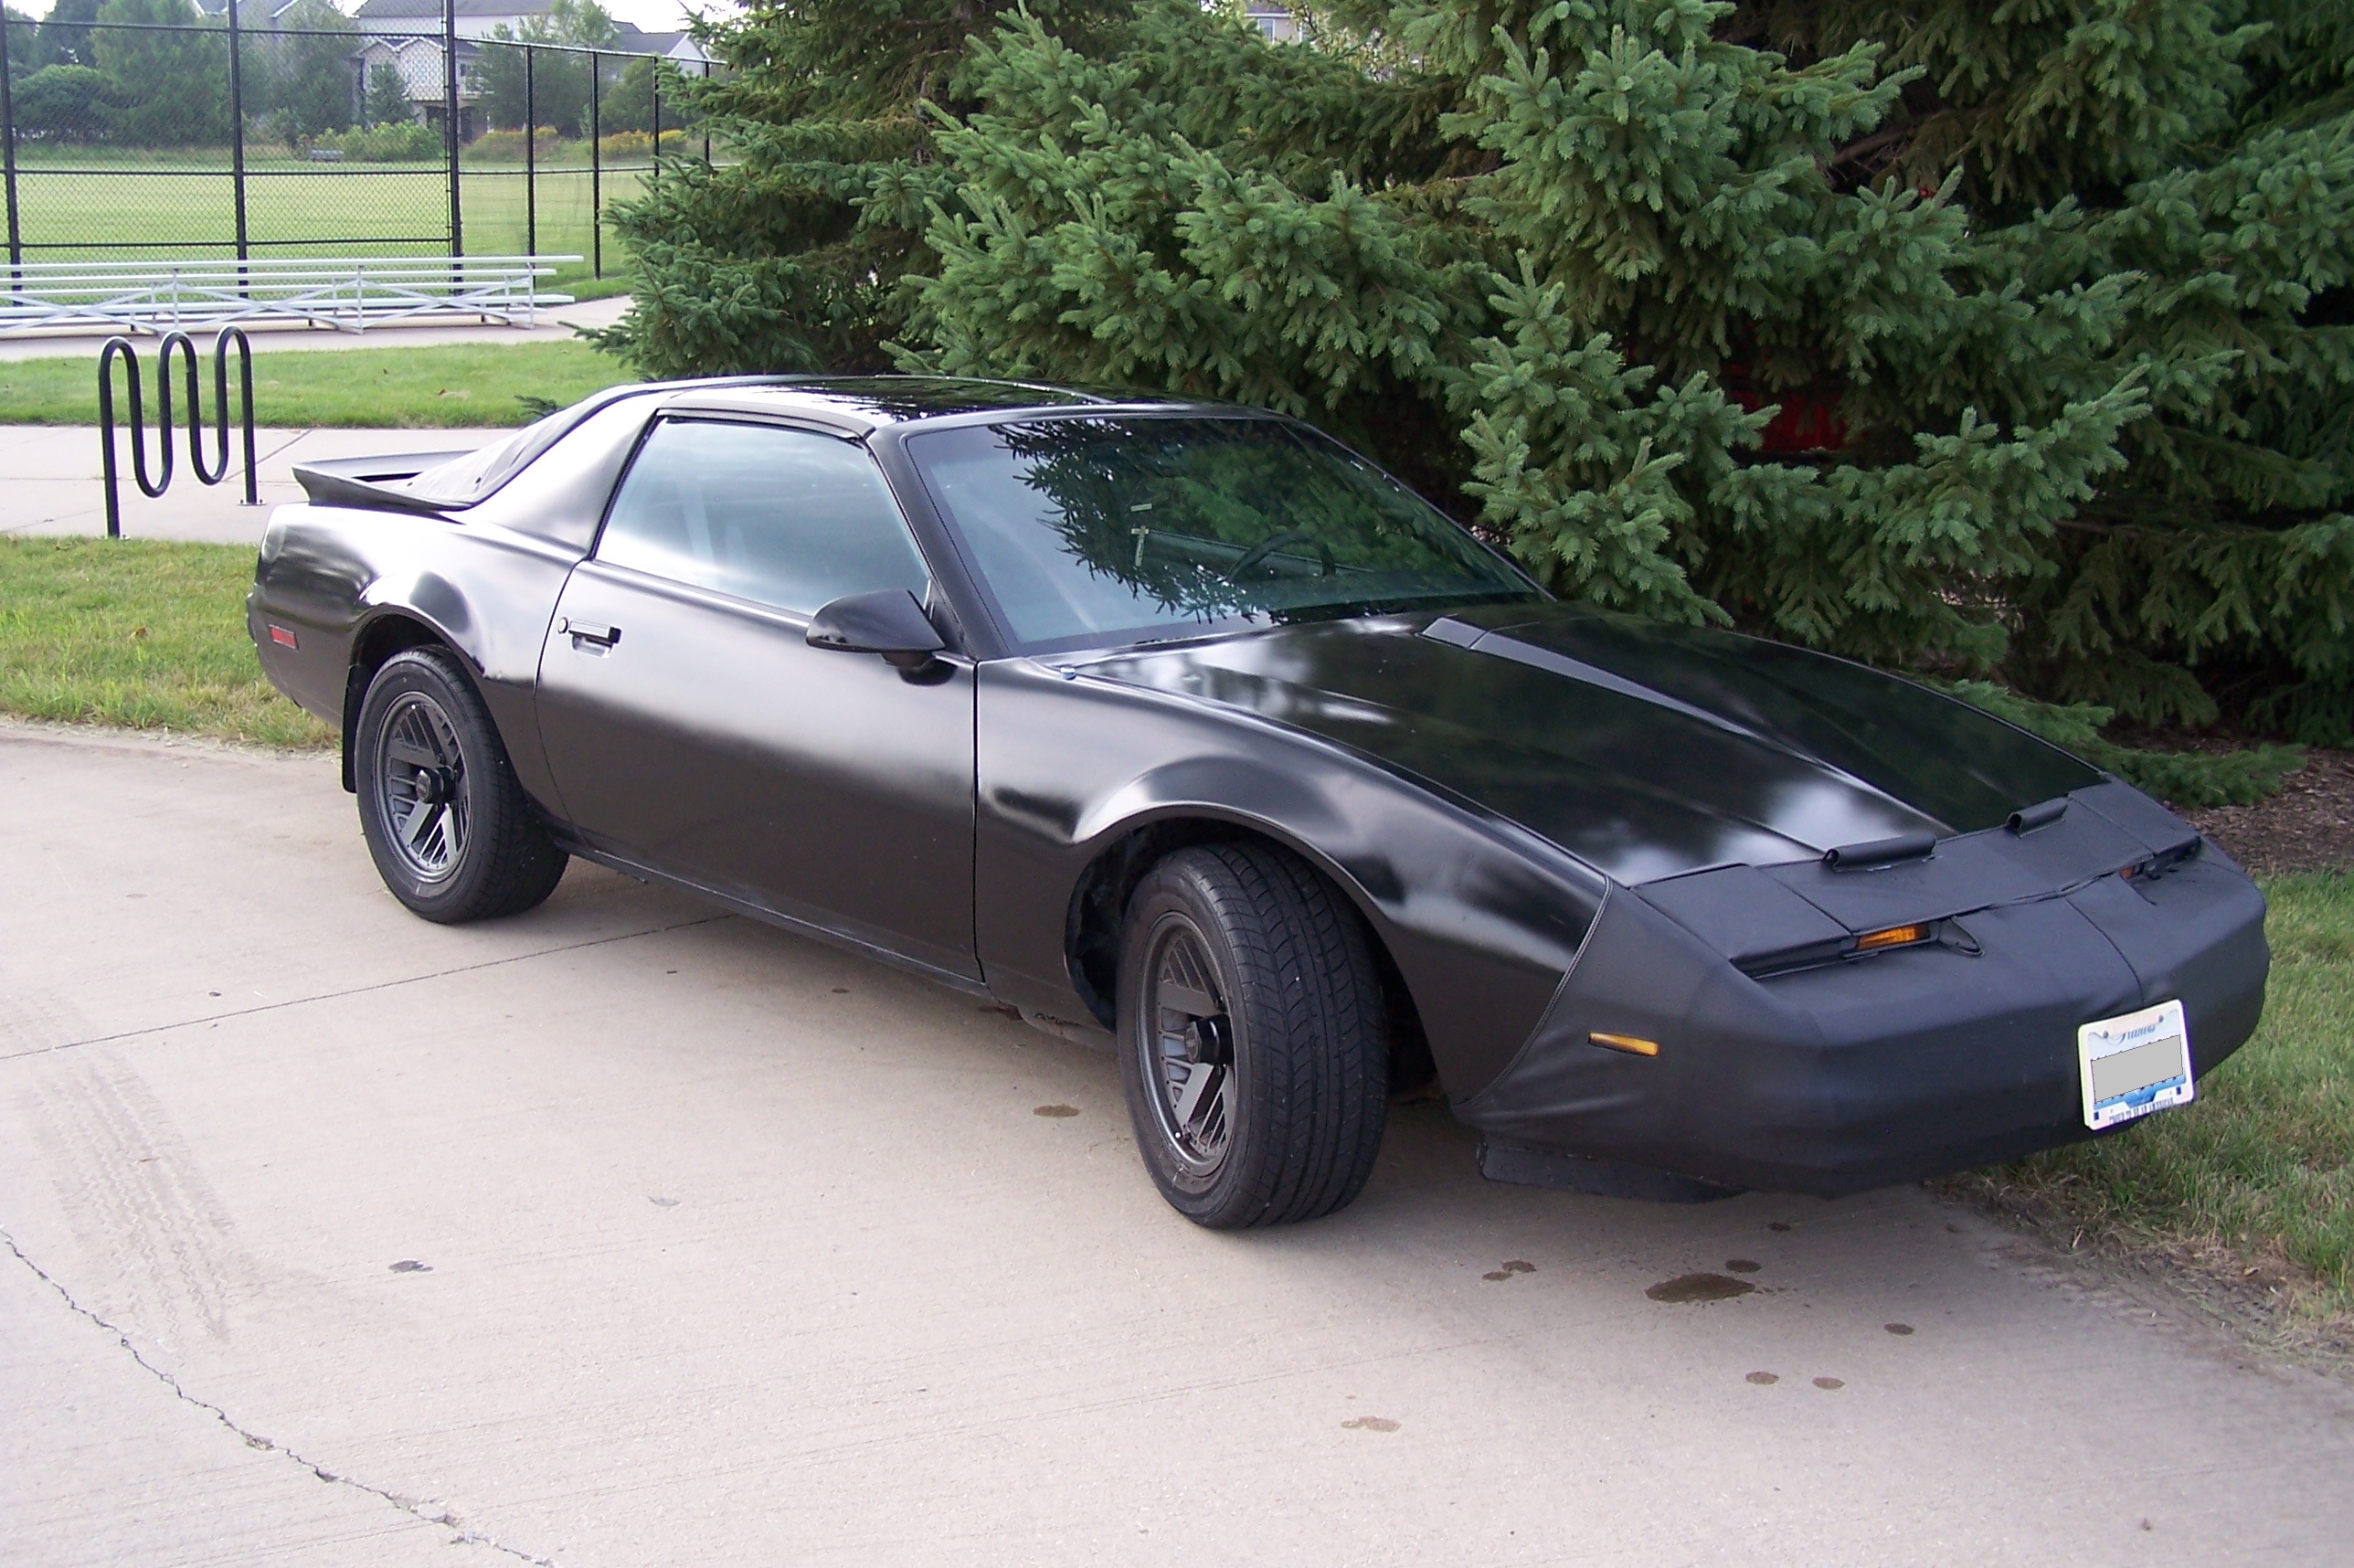 Illinois '88 Pontiac Firebird Formula 305 TBI w/ T-Tops - Make Me an